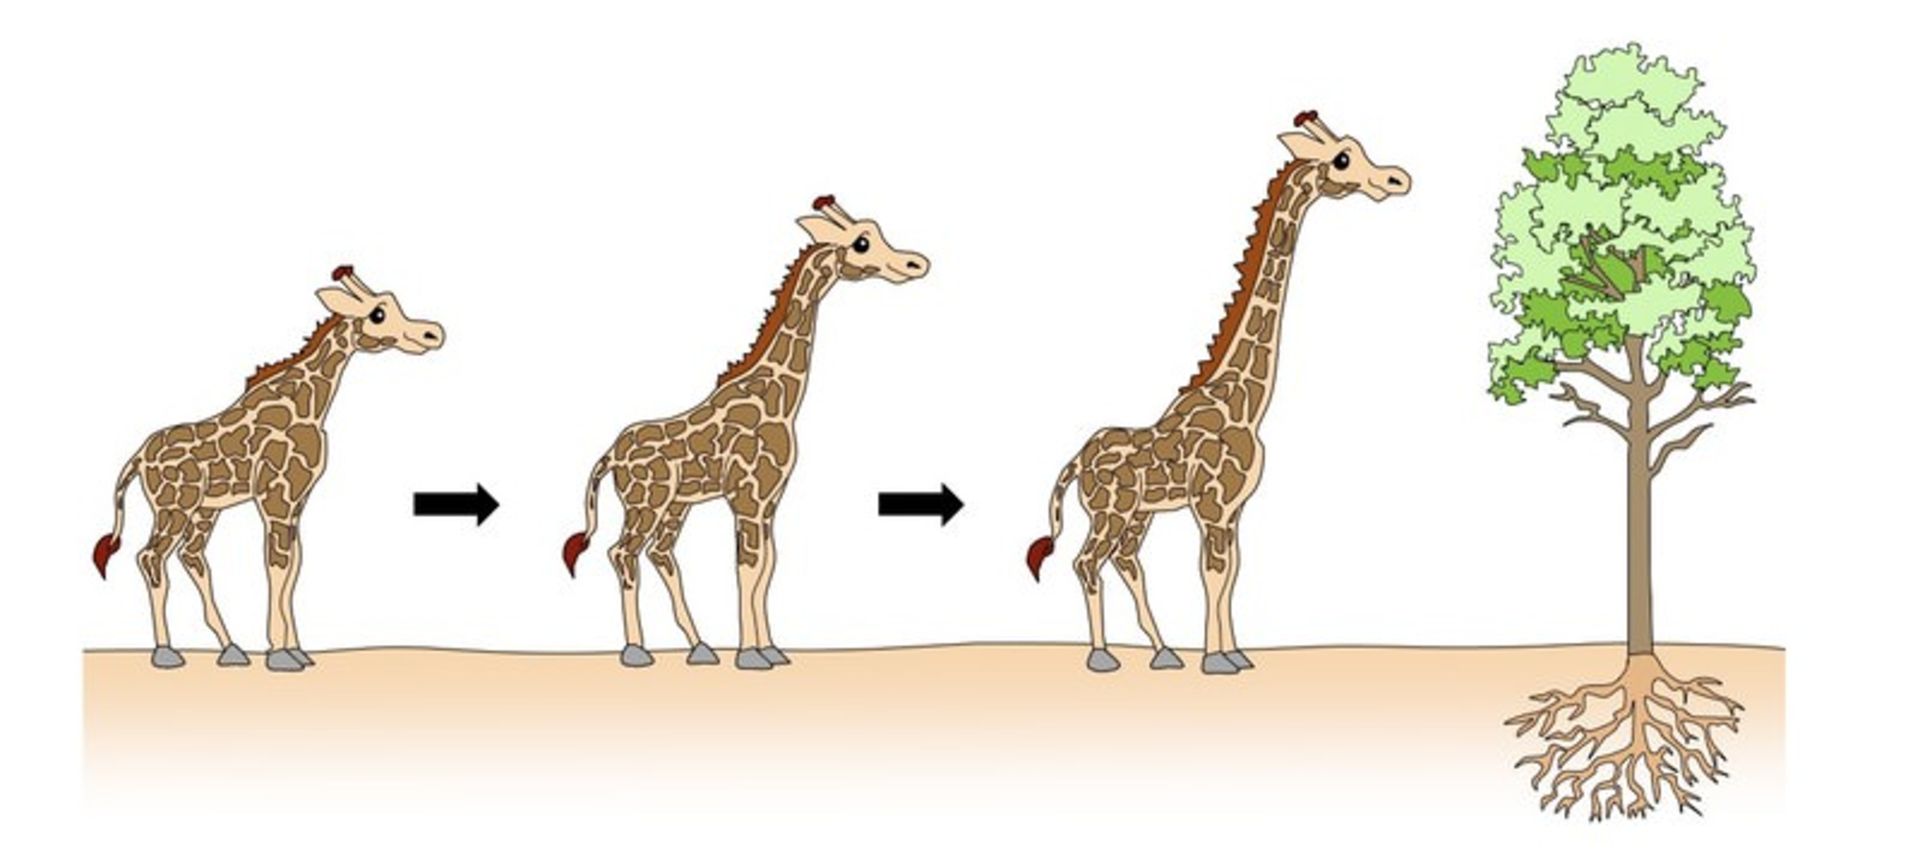 تکامل گردن زرافه ها / Giraffe neck evolution